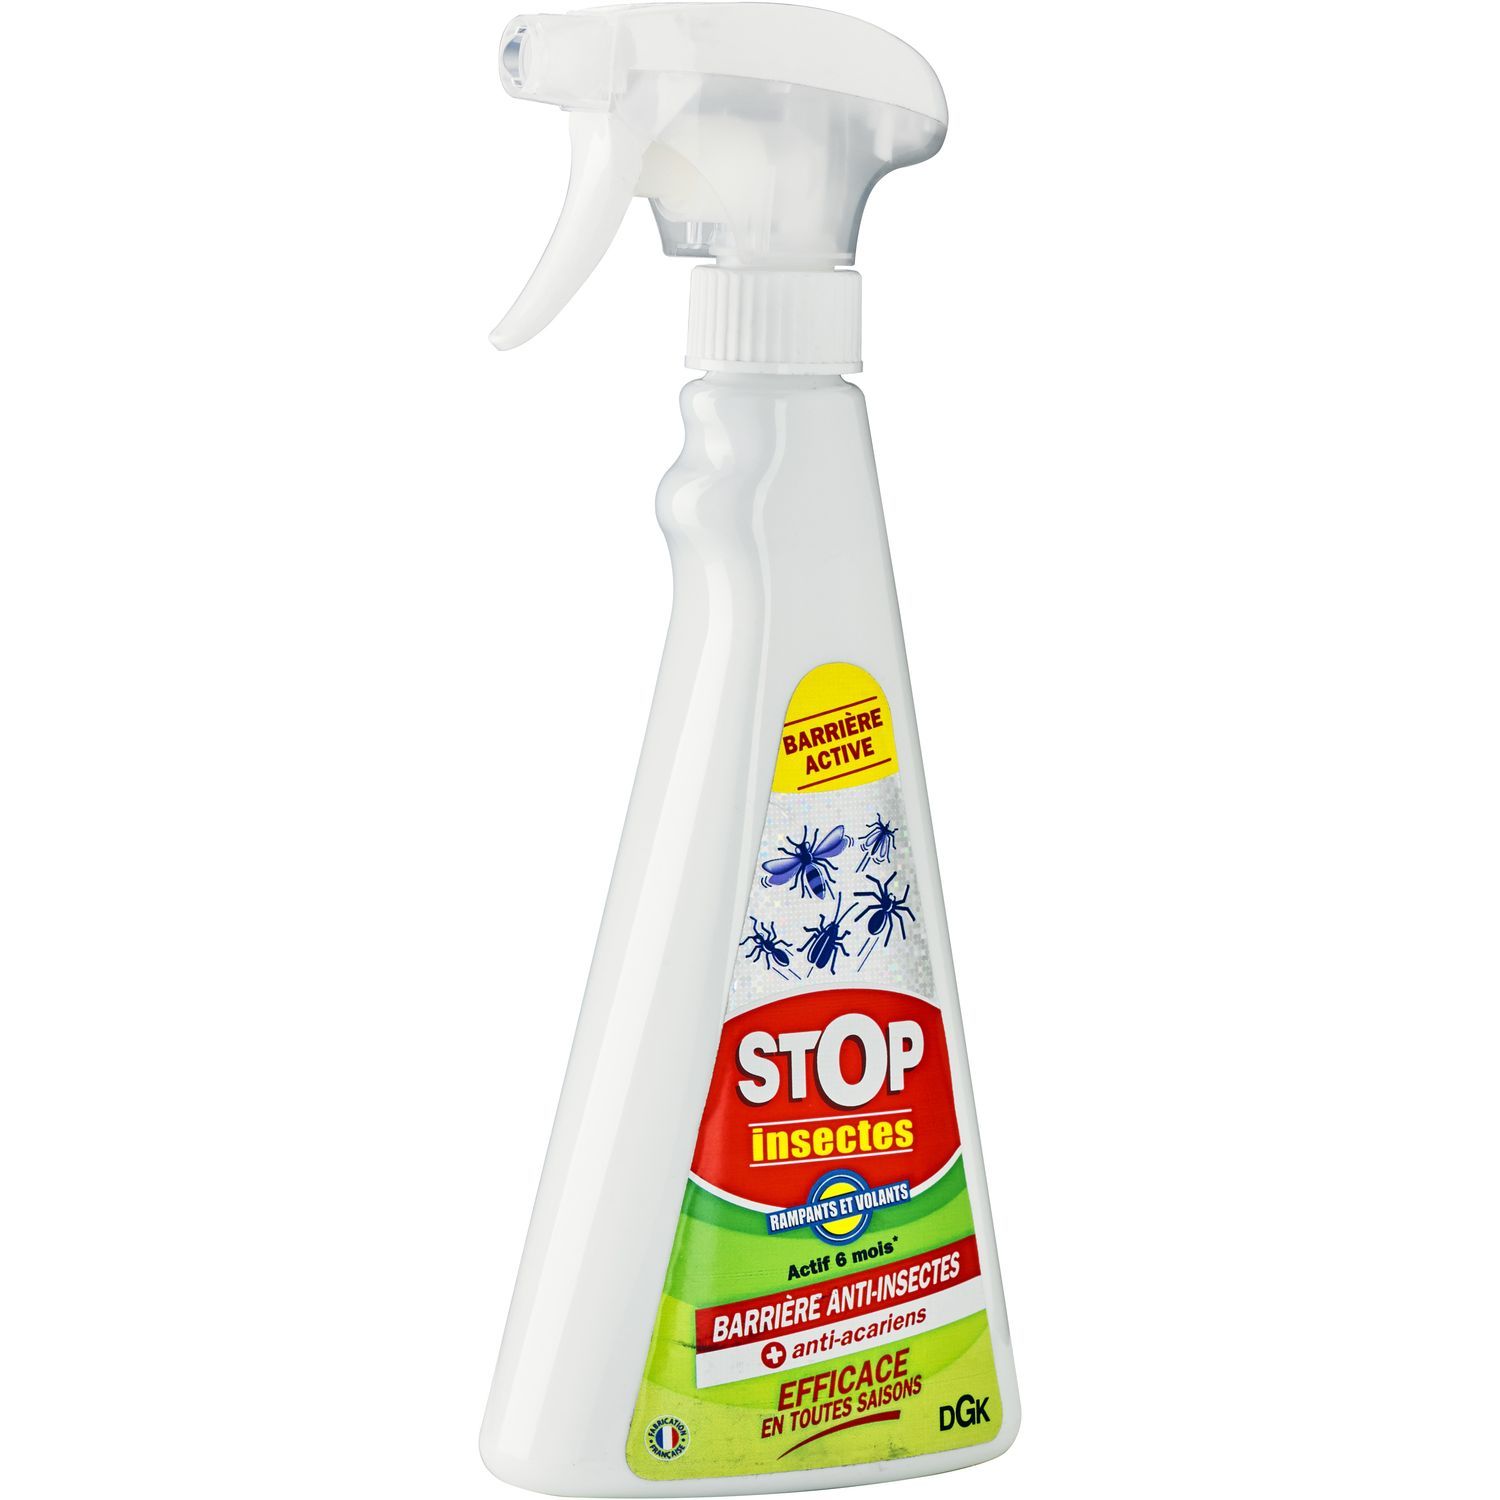 STOP INSECTES Spray barrage anti-insectes & acariens toutes saisons  efficace 6 mois 600ml pas cher 